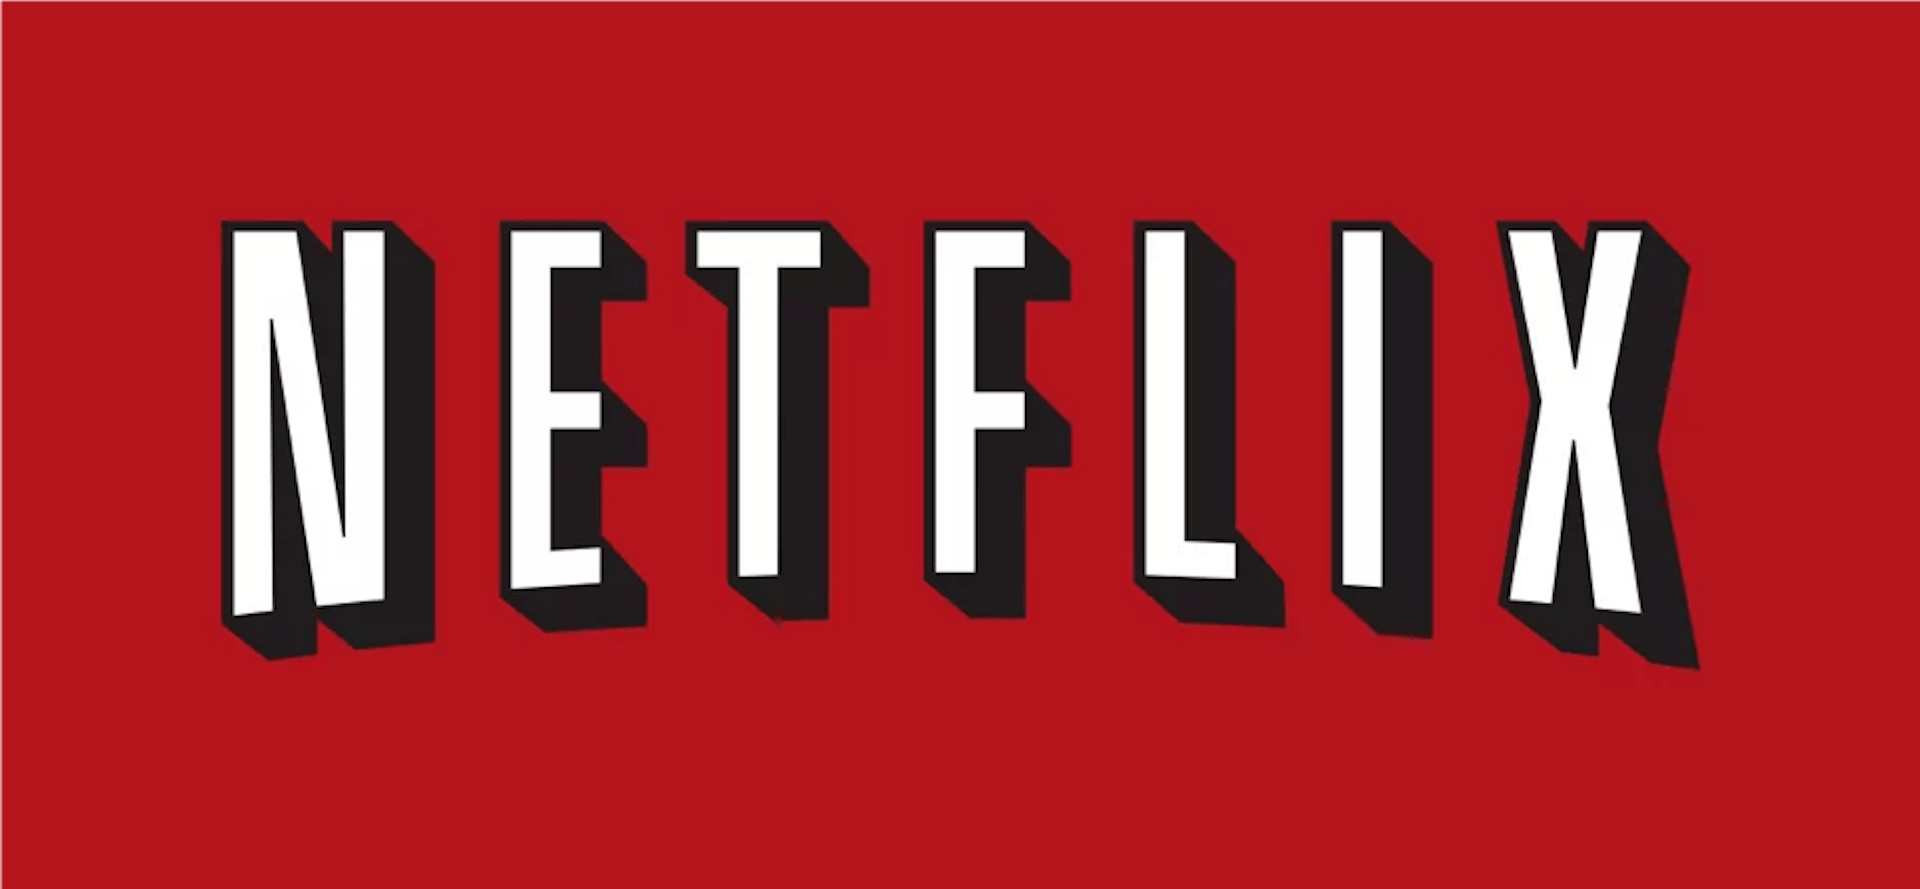 The second Netflix logo